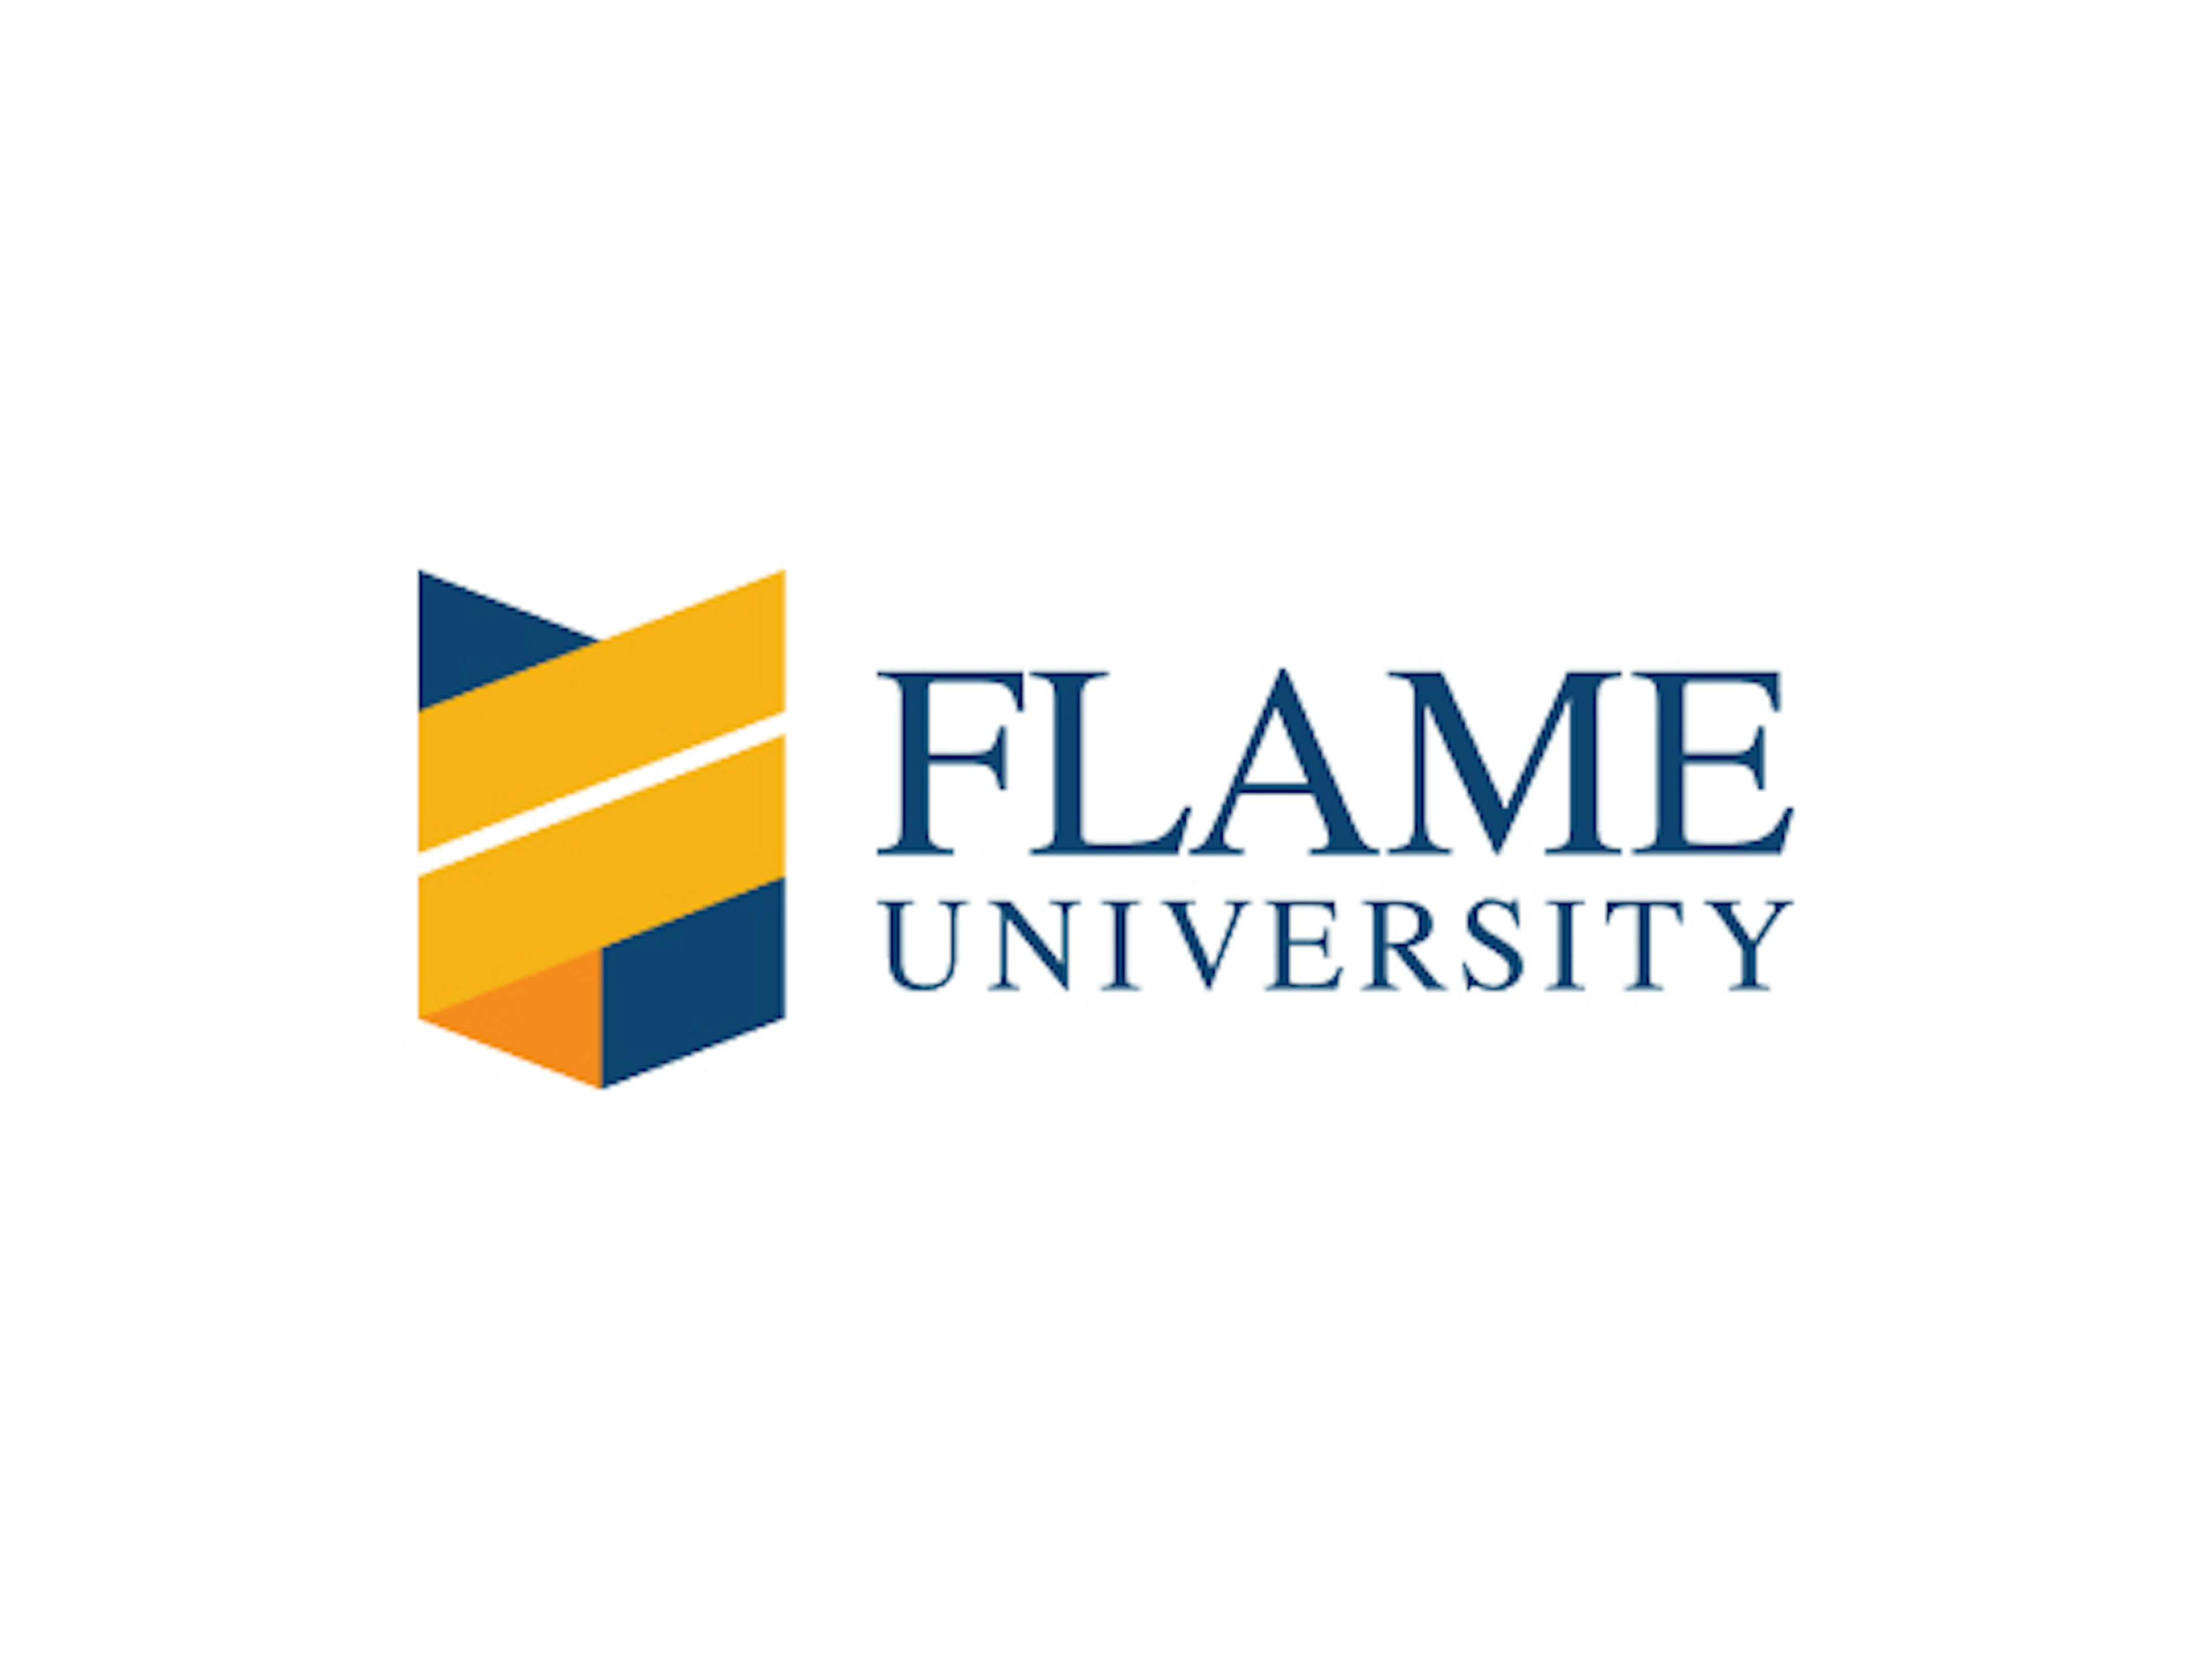 FLAME University